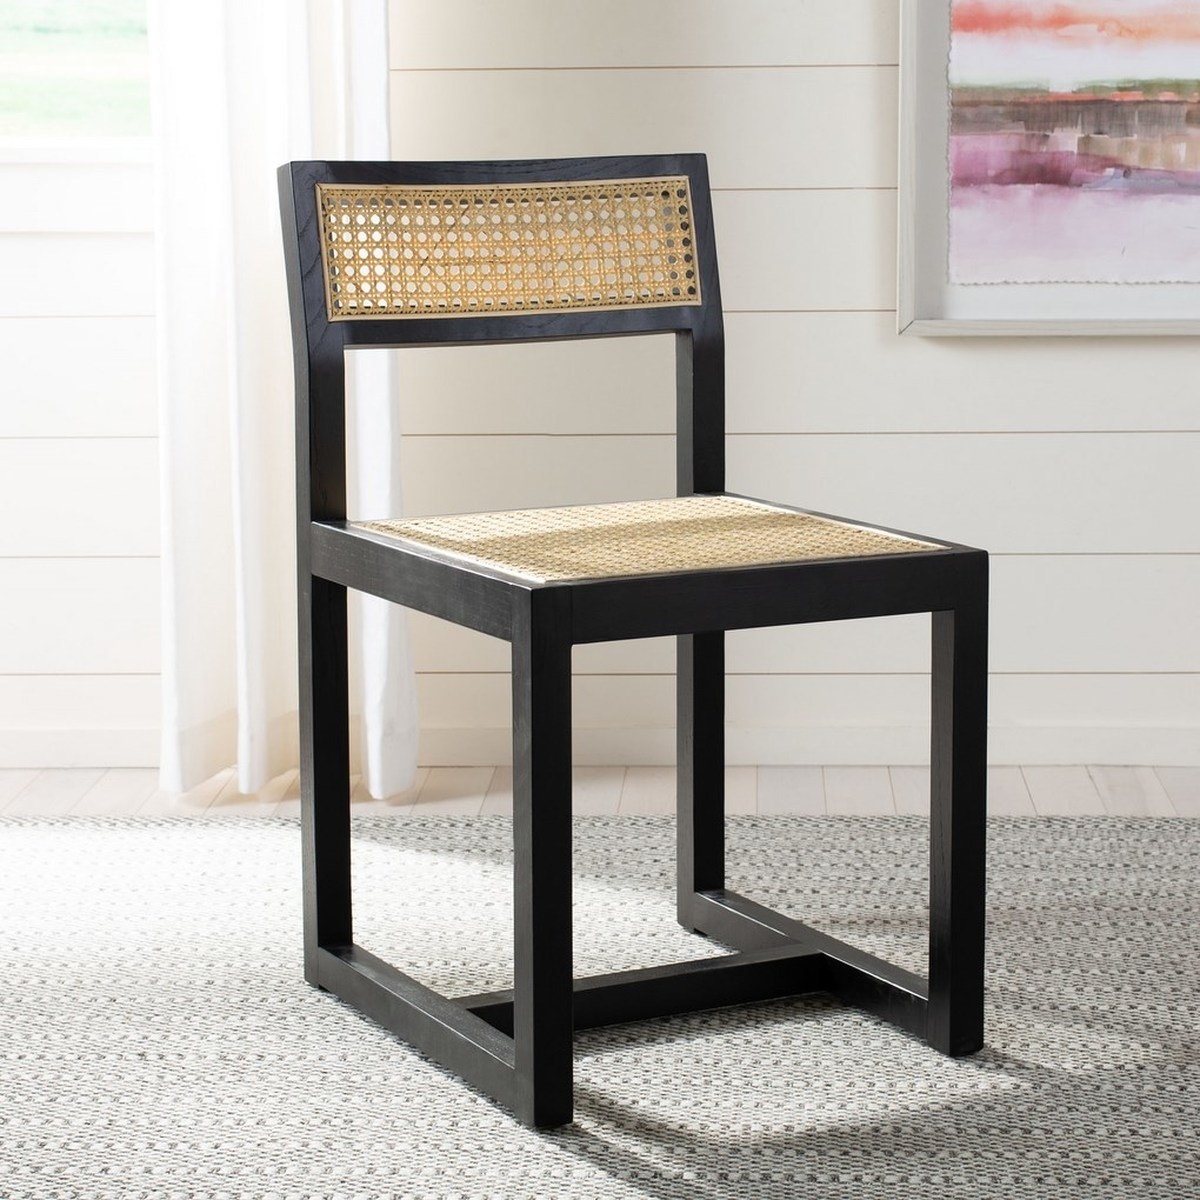 bernice cane dining chair - Image 1